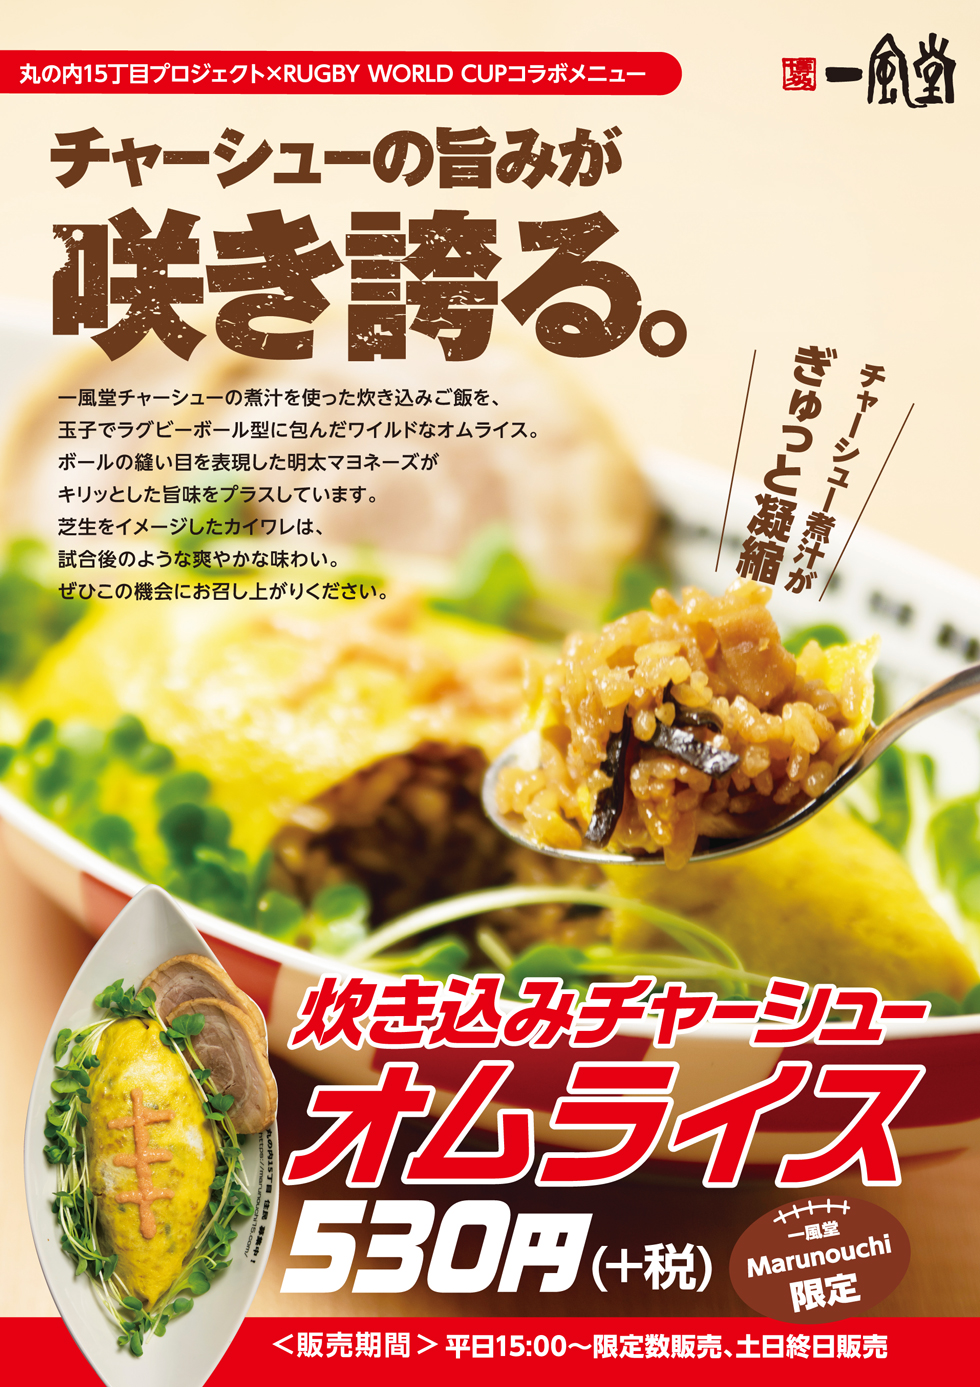 Marunouchi 6 12 水 7 15 月 祝 ラグビーボール型 炊き込みチャーシューオムライス 発売 ラーメン 一風堂 Ramen Ippudo